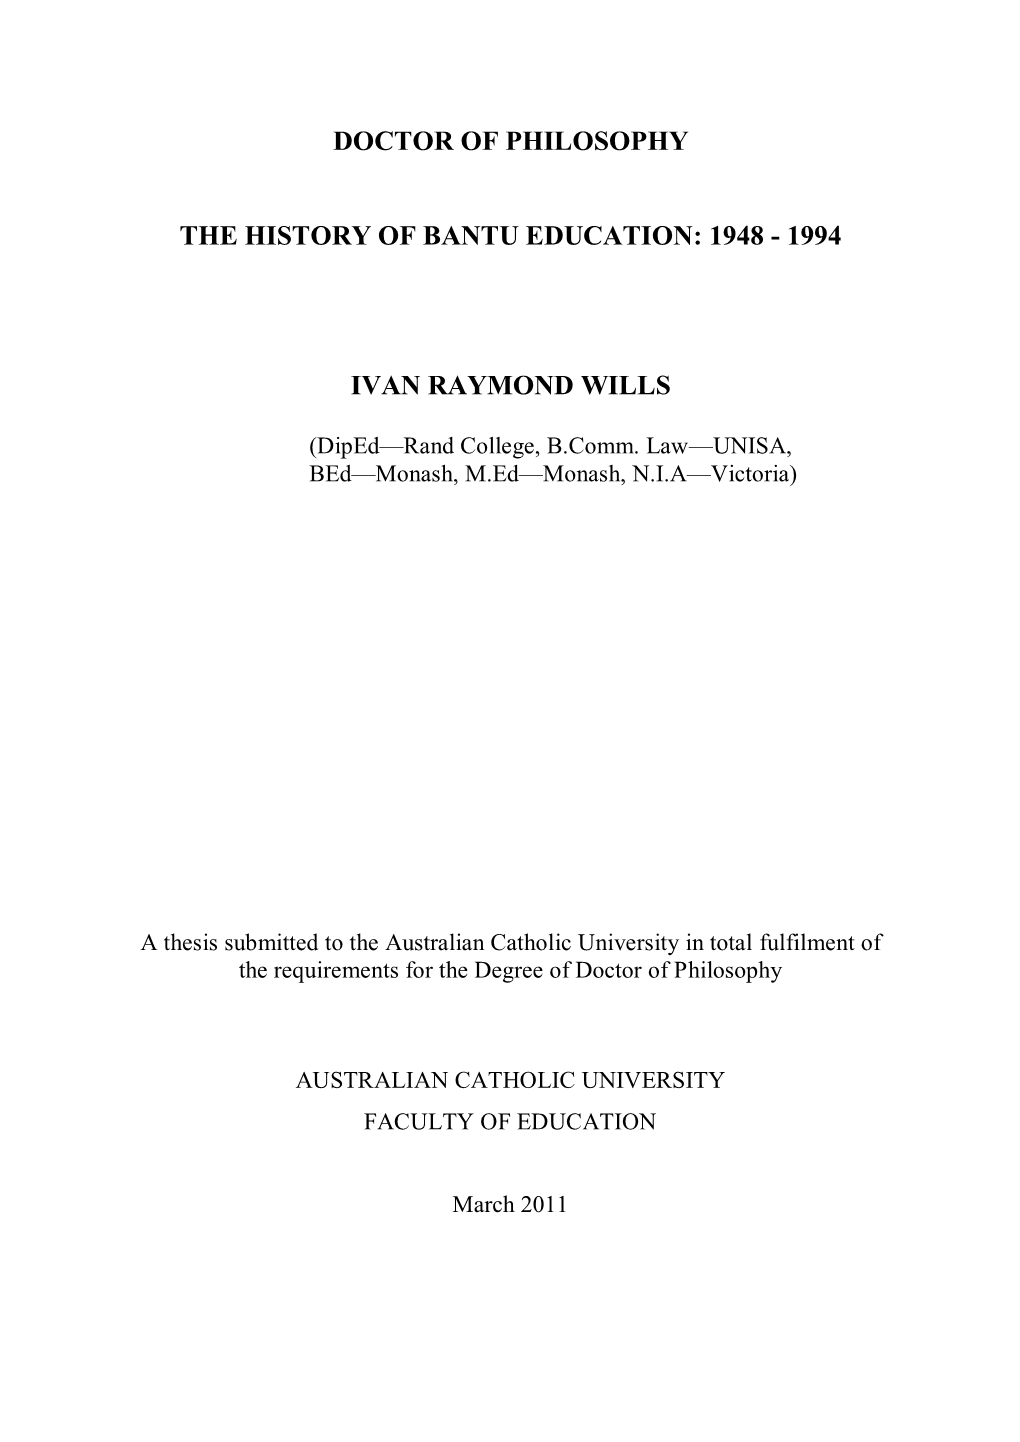 The History of Bantu Education: 1948 - 1994